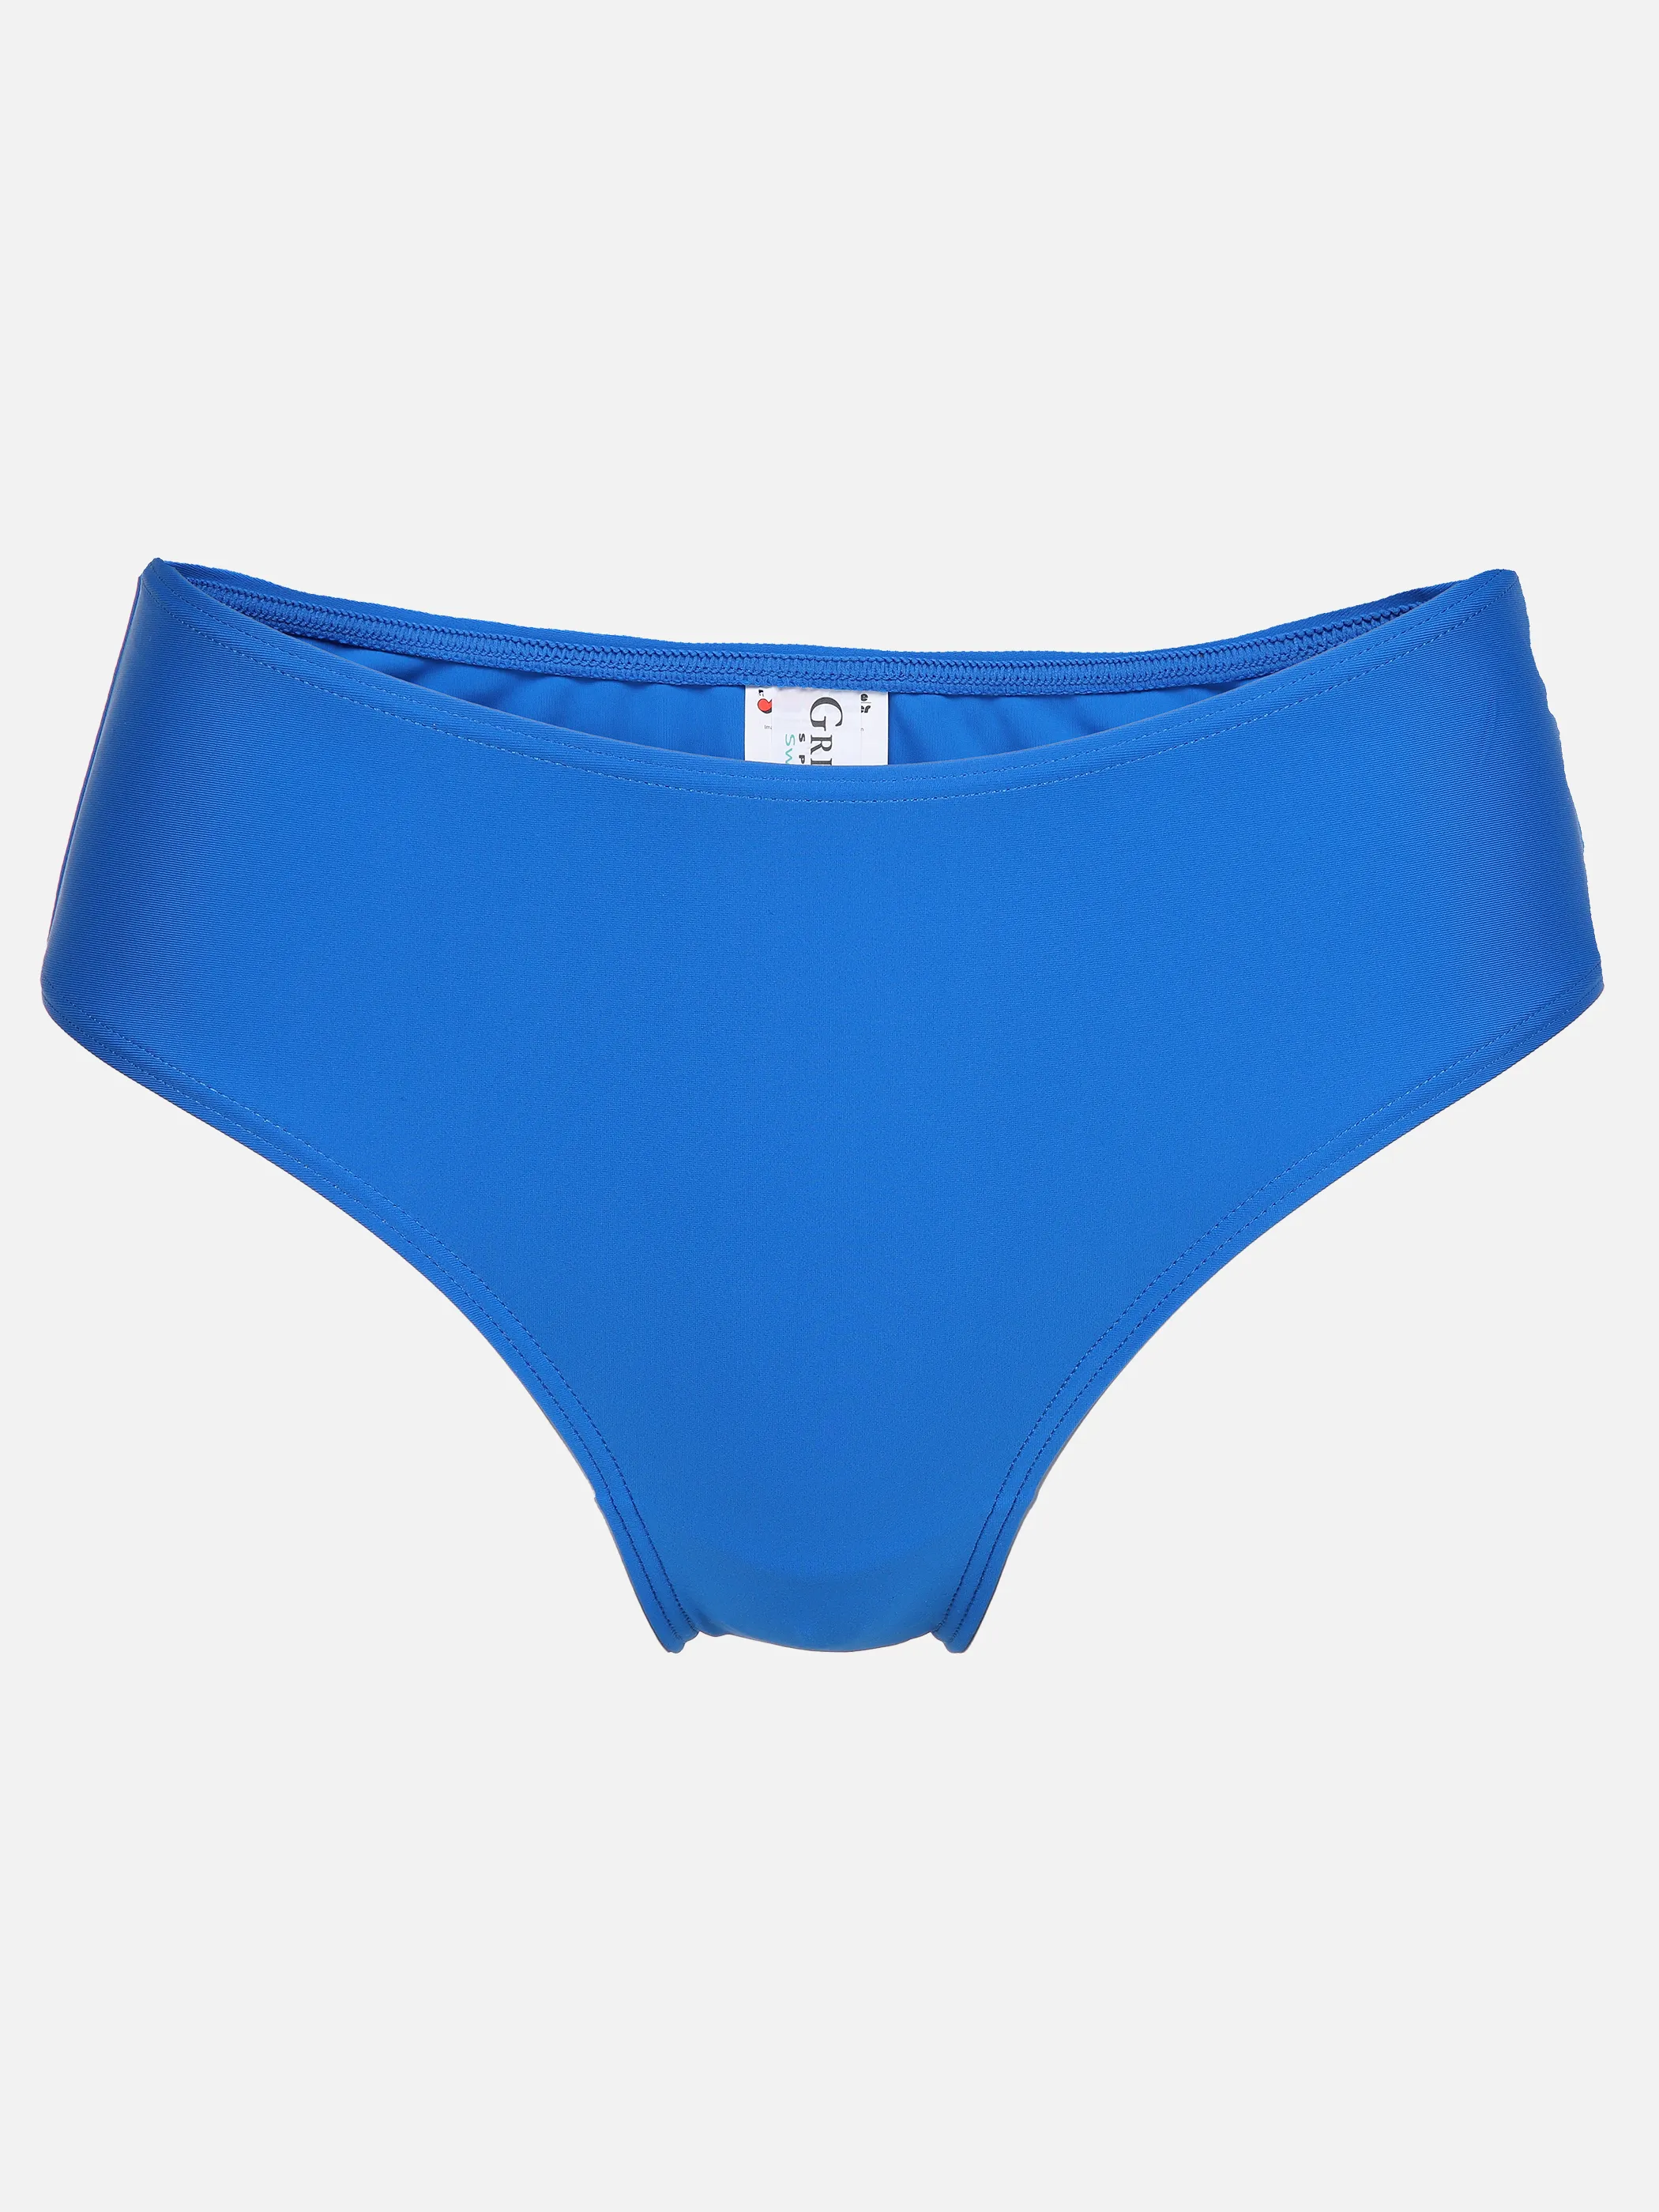 Grinario Sports Da-Bikini Hose Blau 890112 ROYAL BLUE 1